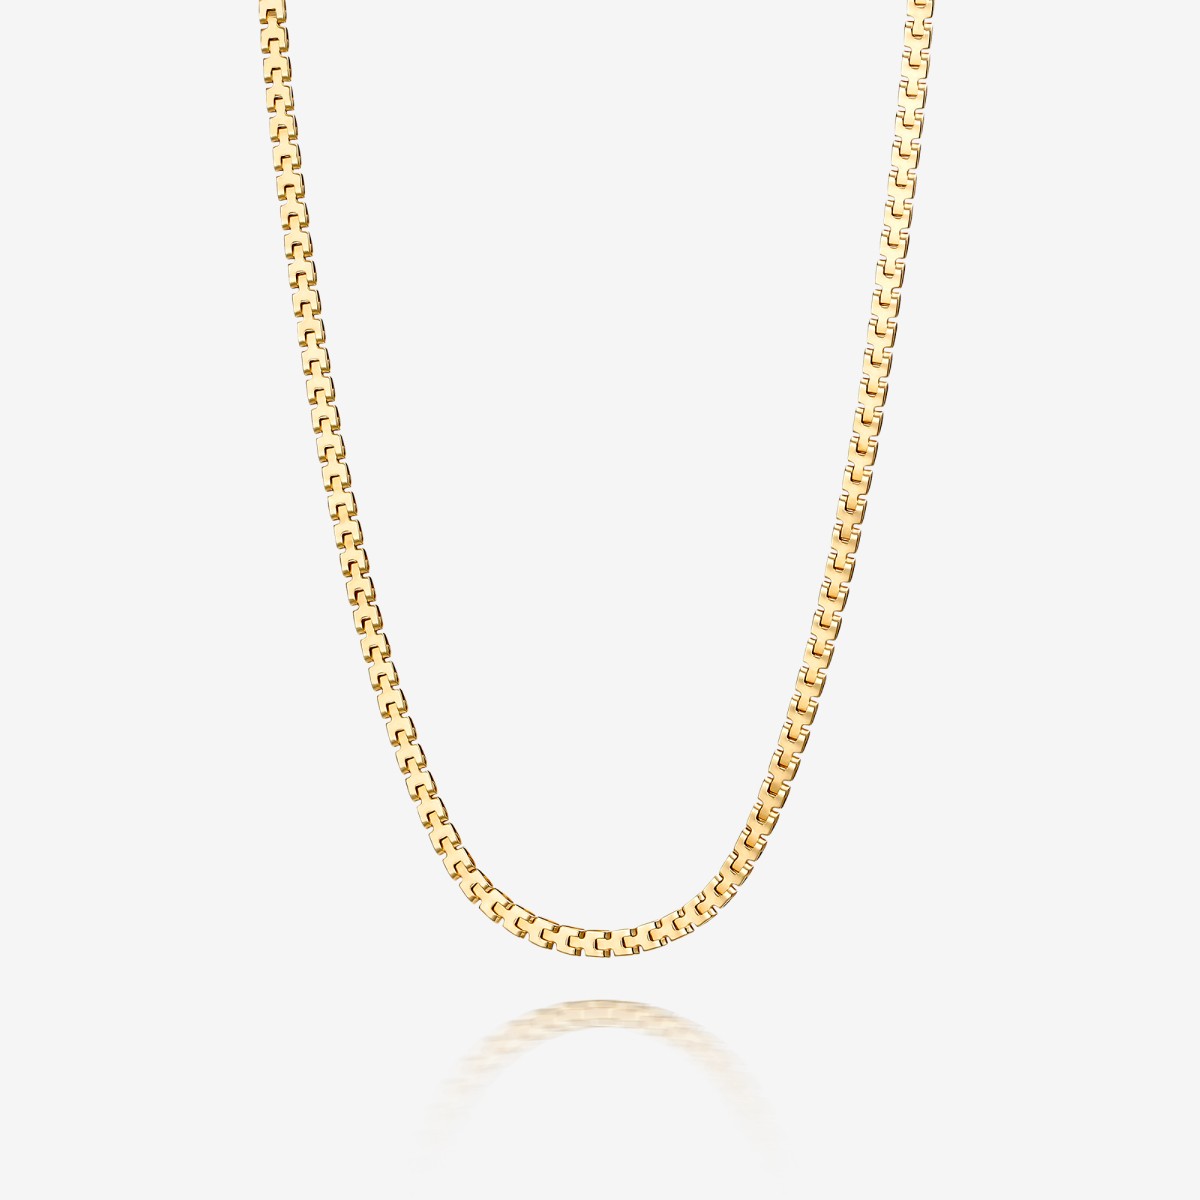 Zip Chain 36cm - Halskette - 18k vergoldet